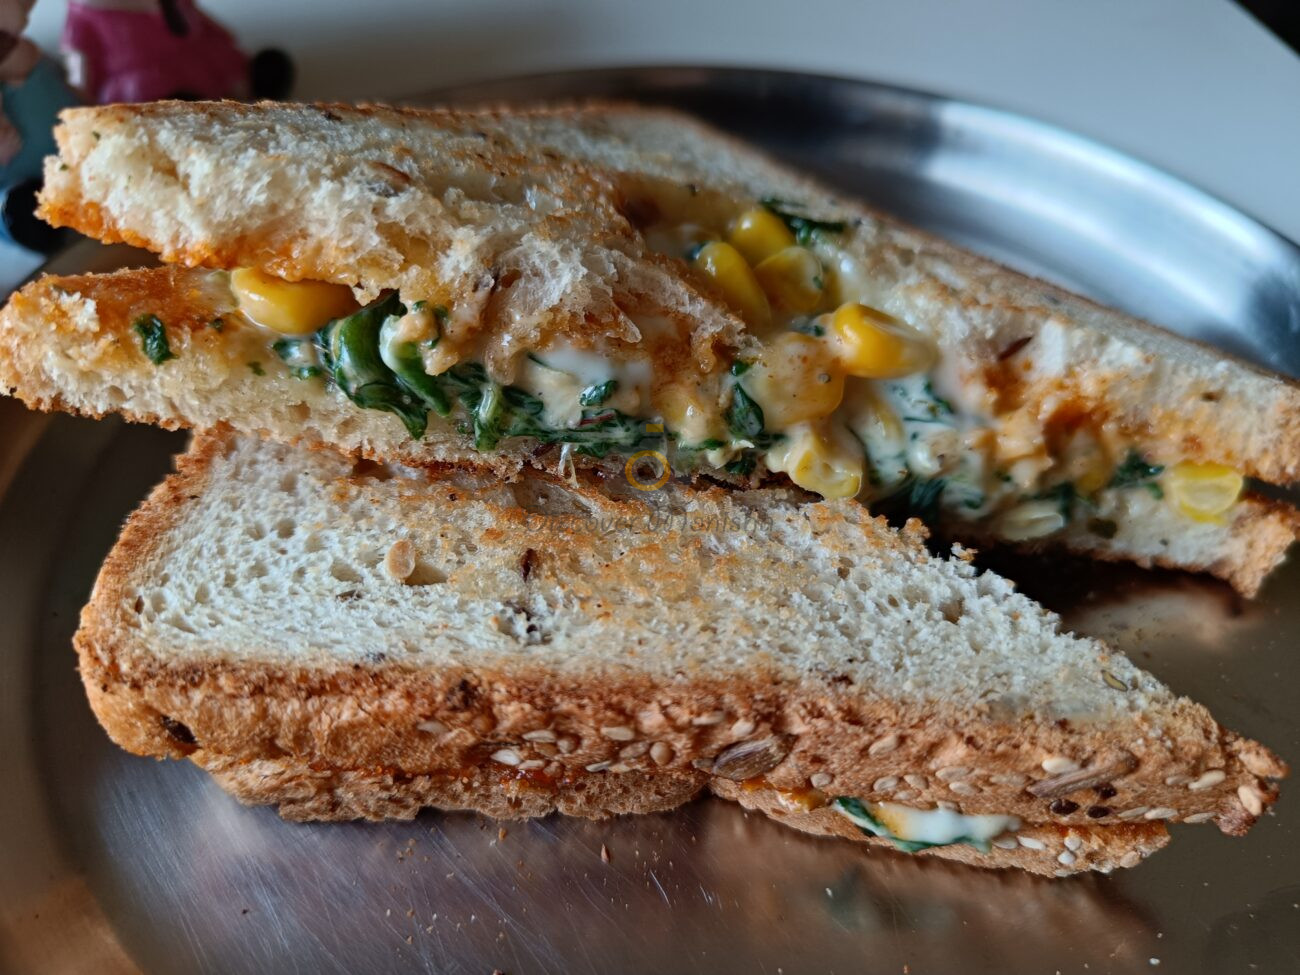 Corn spinach sandwich | Unusual style | Creamy and cheesy